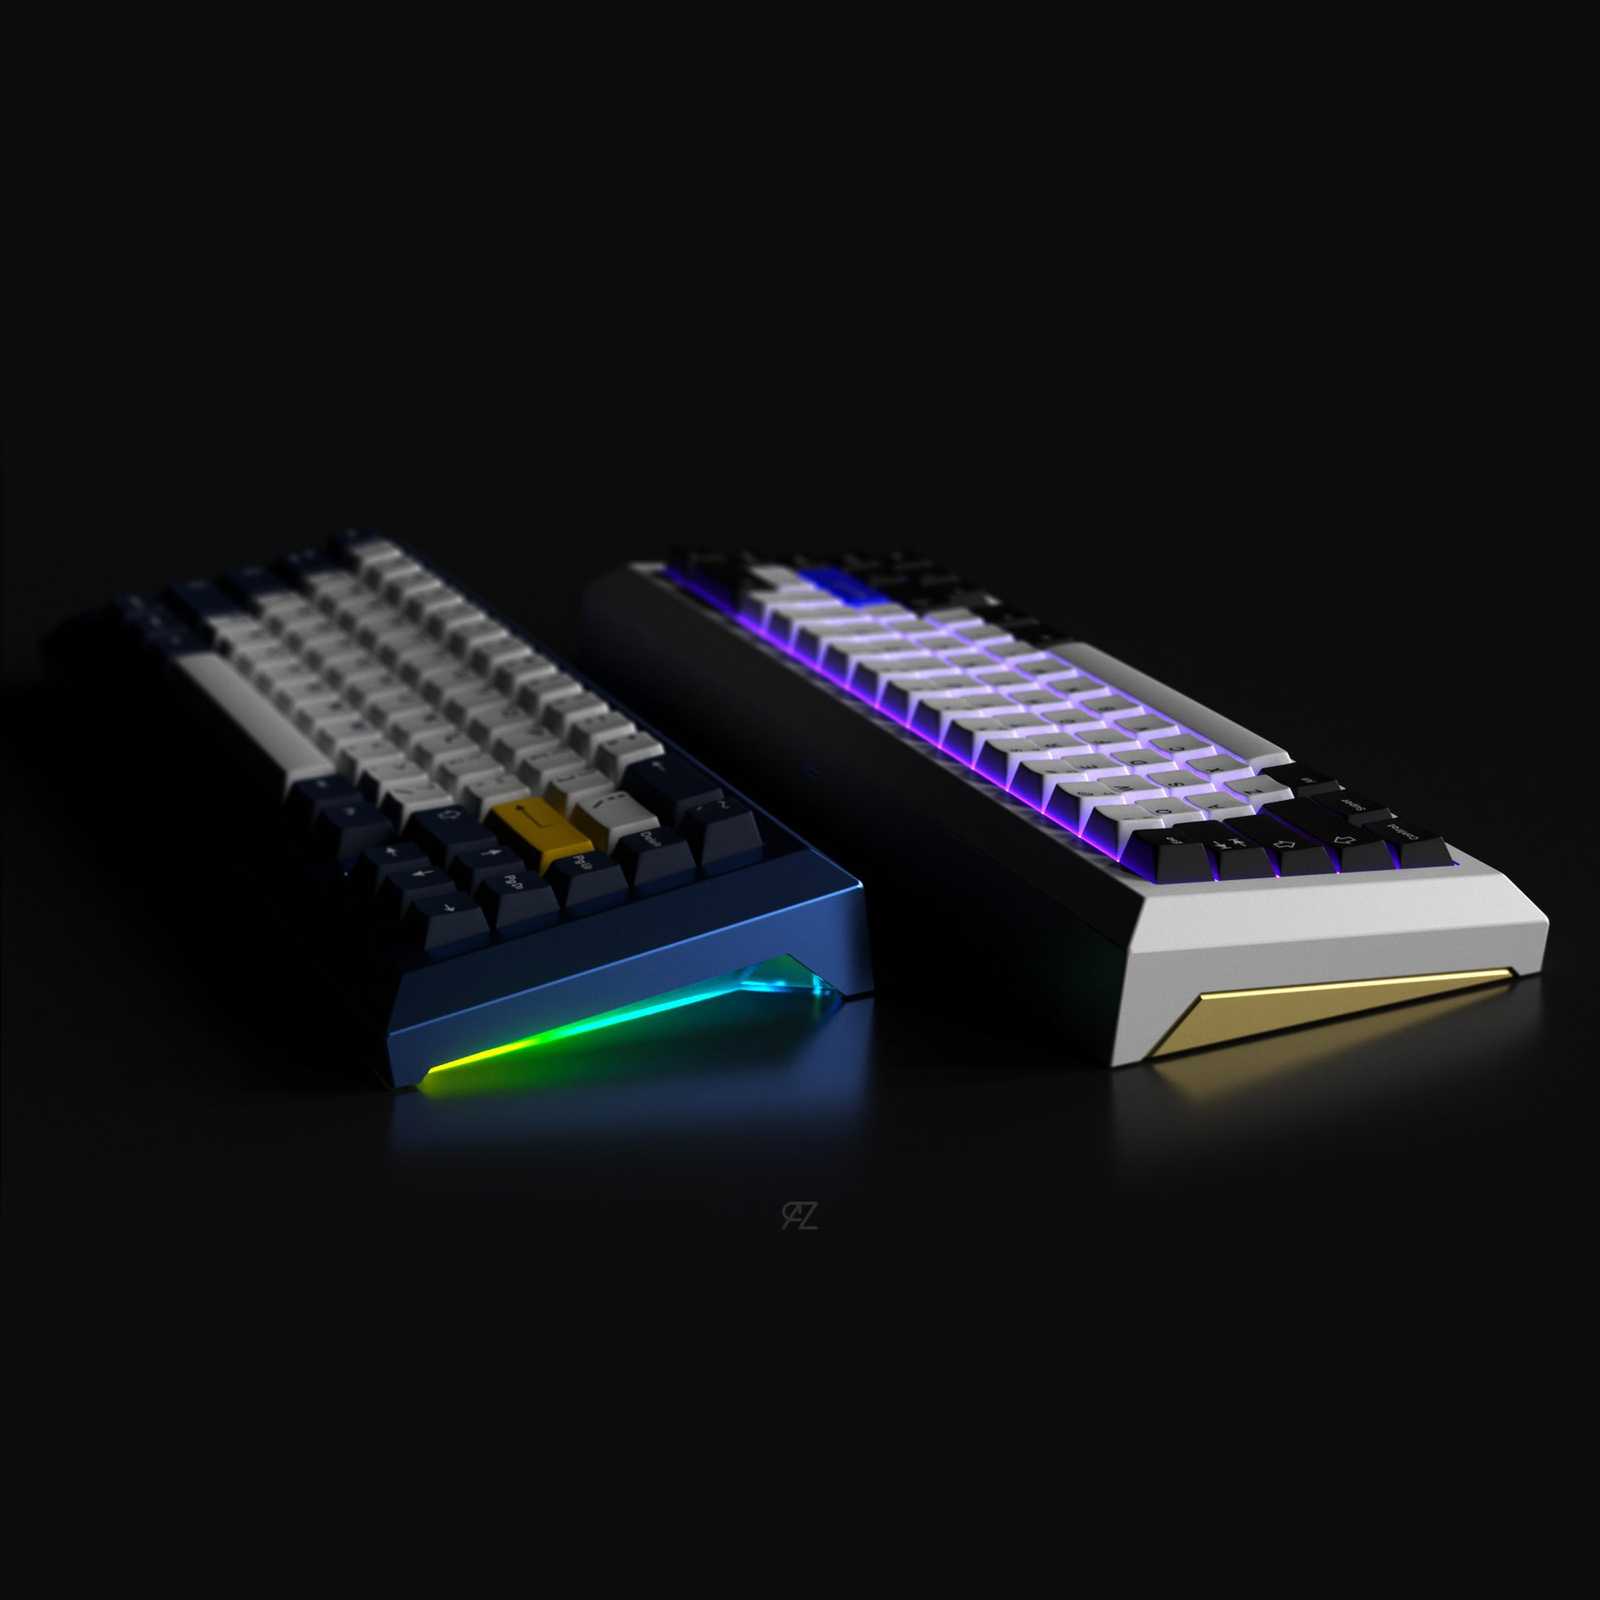 Two custom keyboards